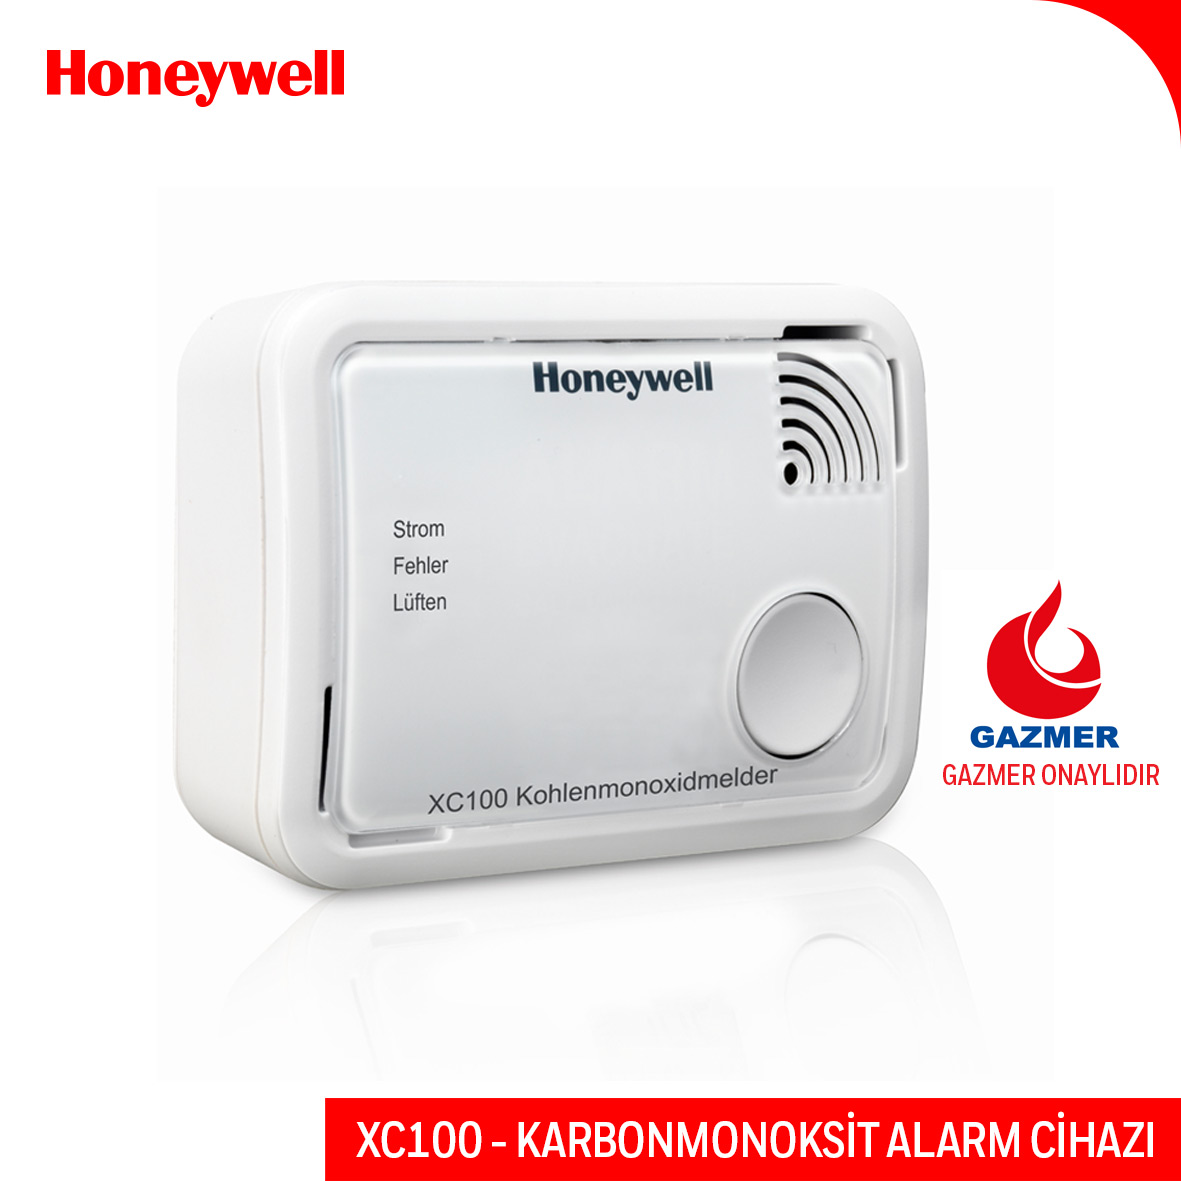 Honeywell Karbonmonoksit Alarm Cihazı - Xc100